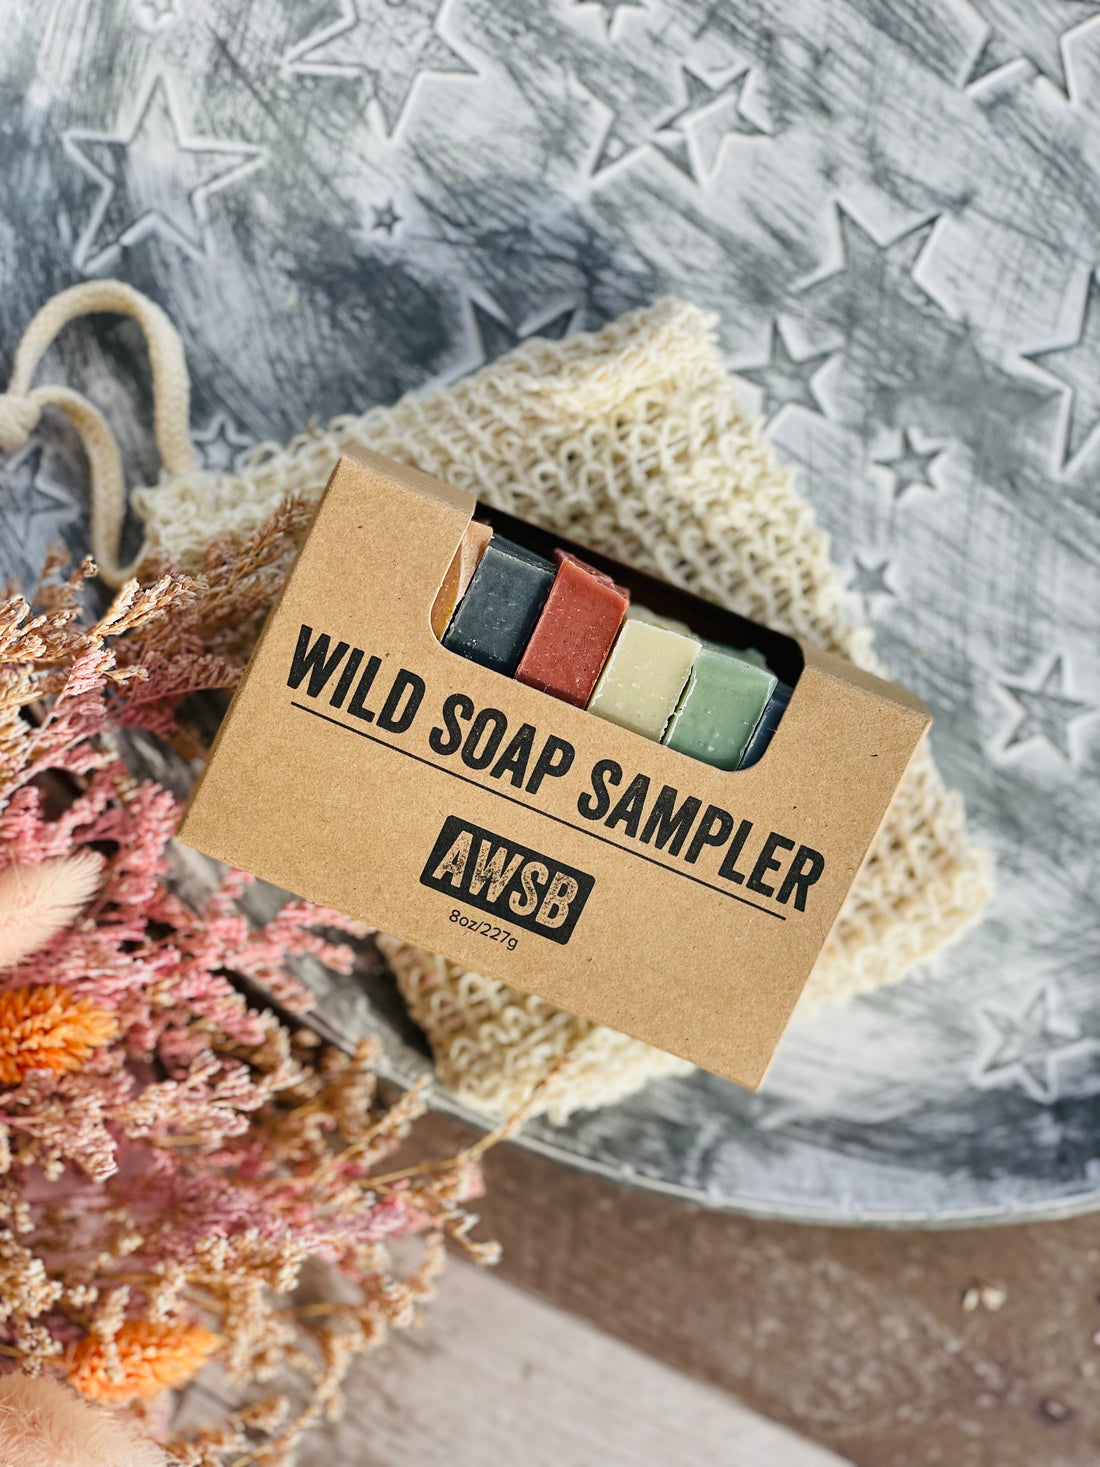 AWSB Wild Soap Sampler